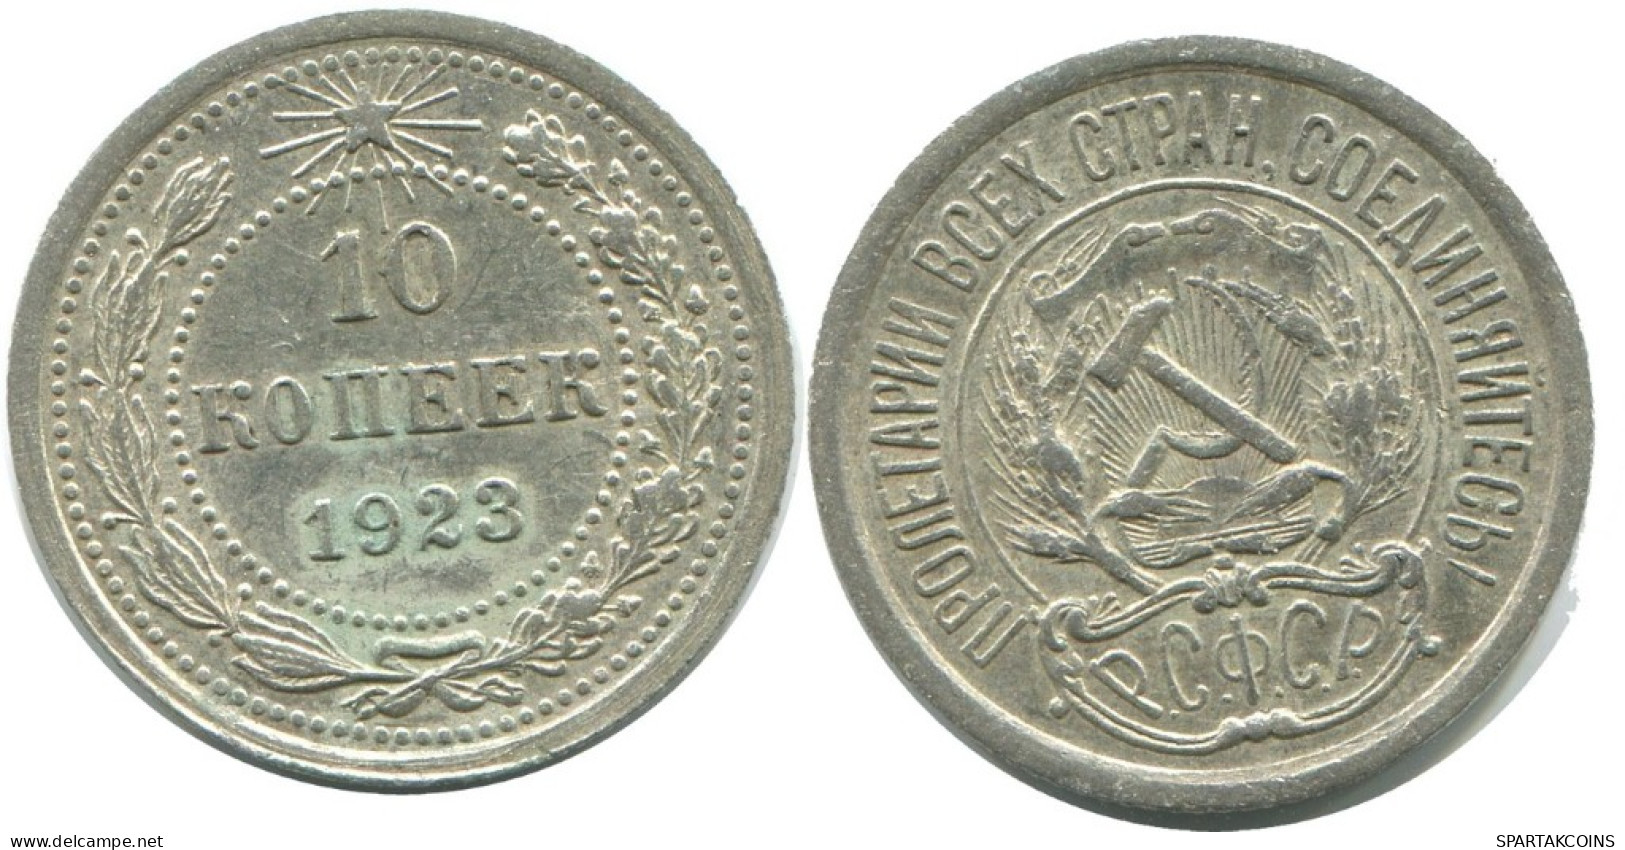 10 KOPEKS 1923 RUSSIA RSFSR SILVER Coin HIGH GRADE #AE898.4.U.A - Russia